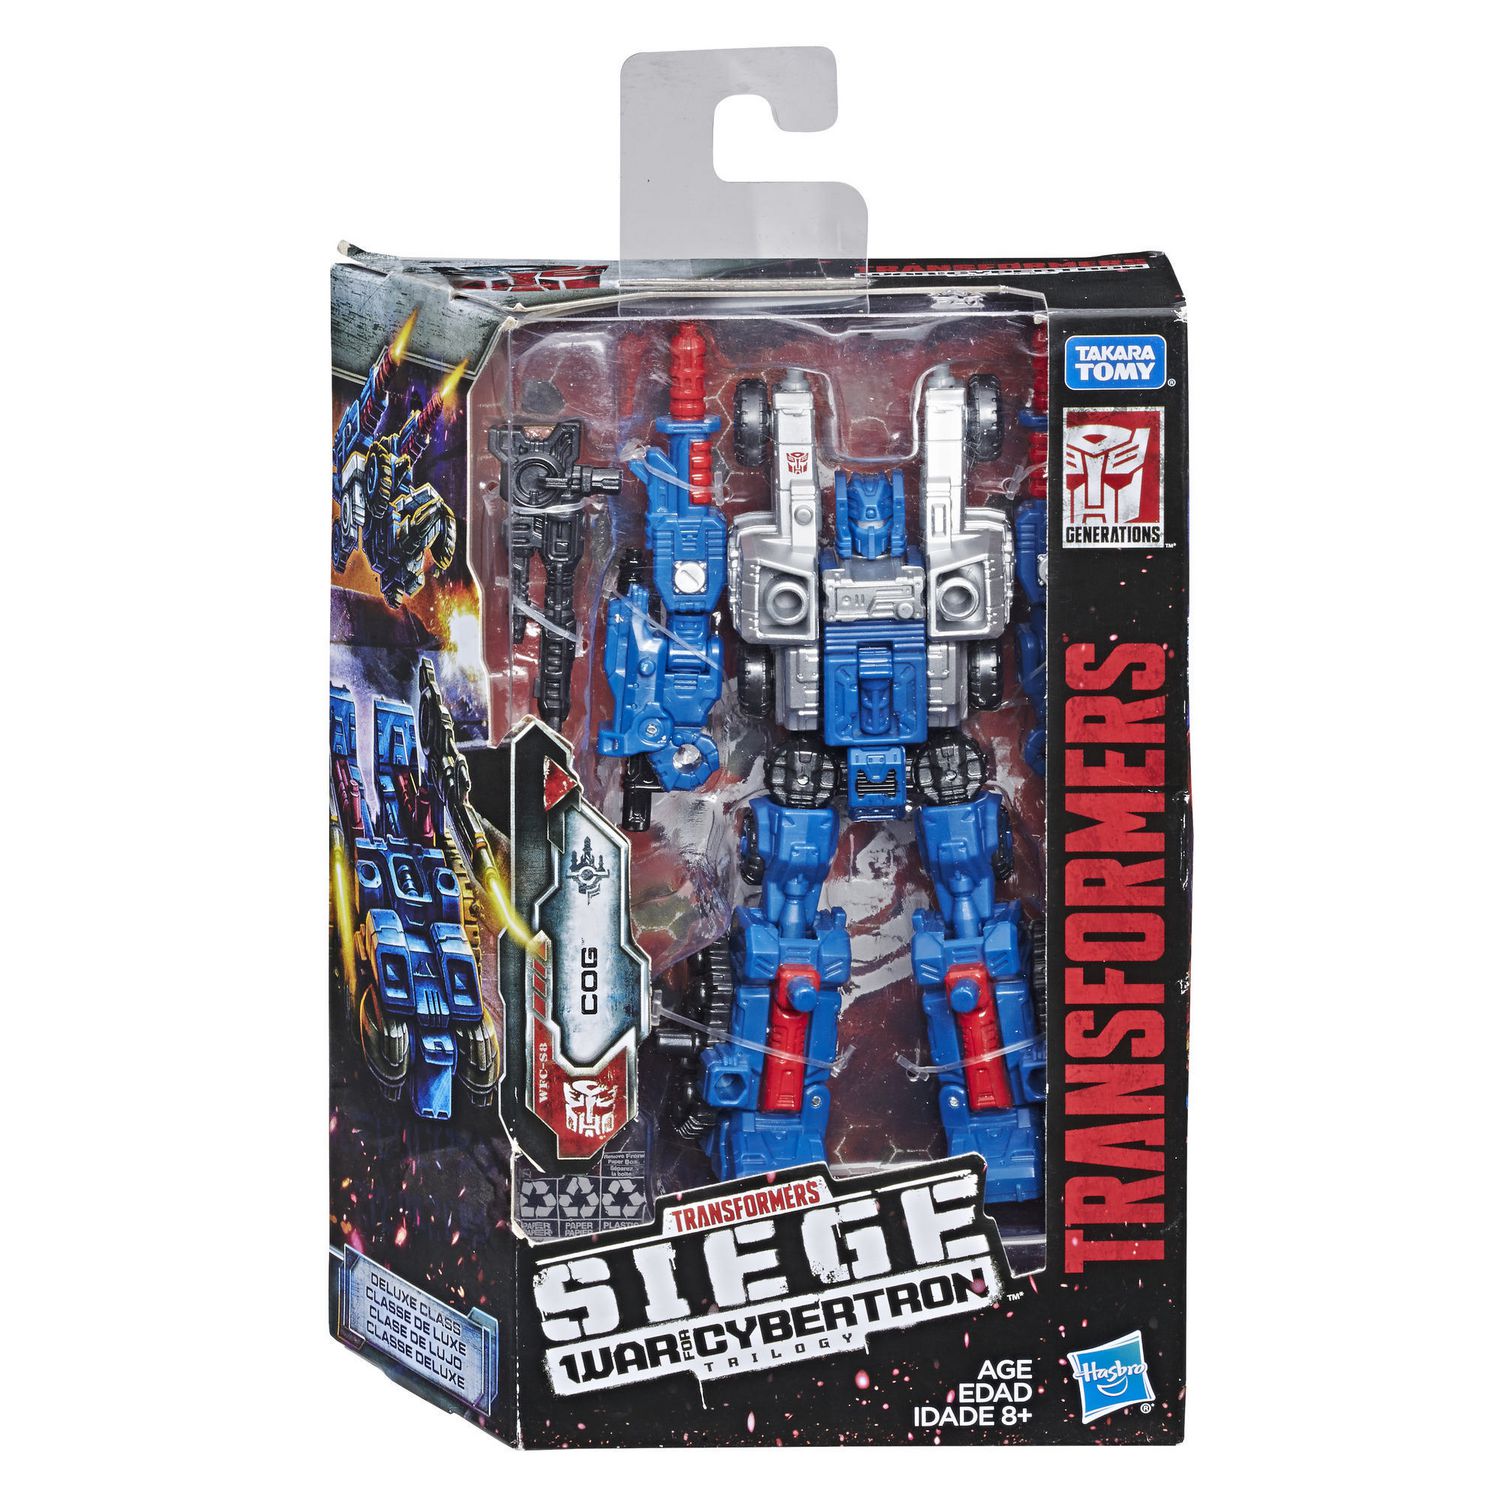 transformers siege cog